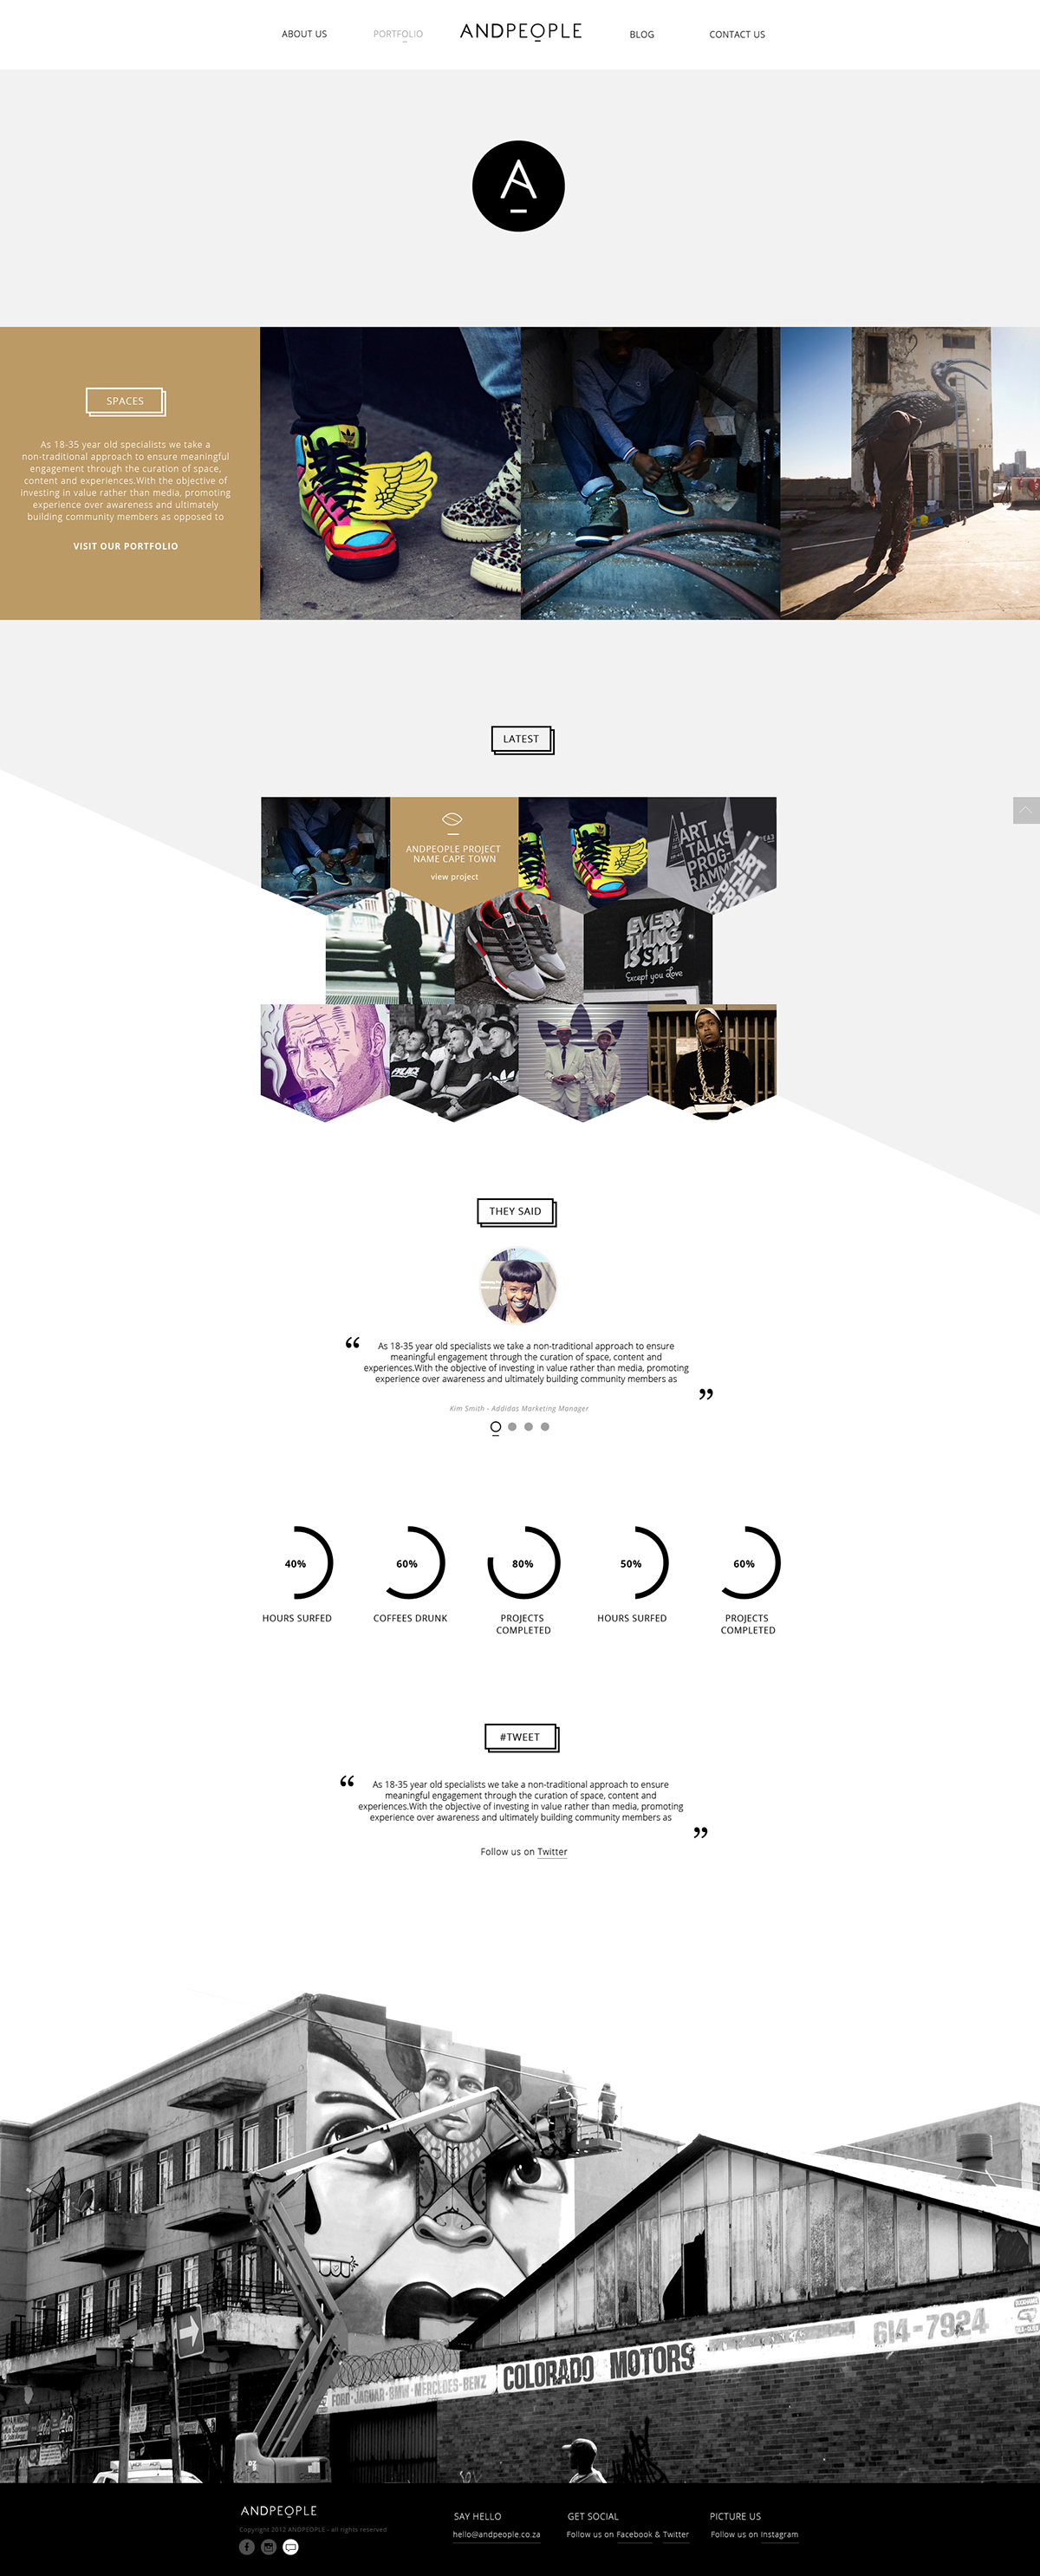 Website andpeople minimalist cape town Web design